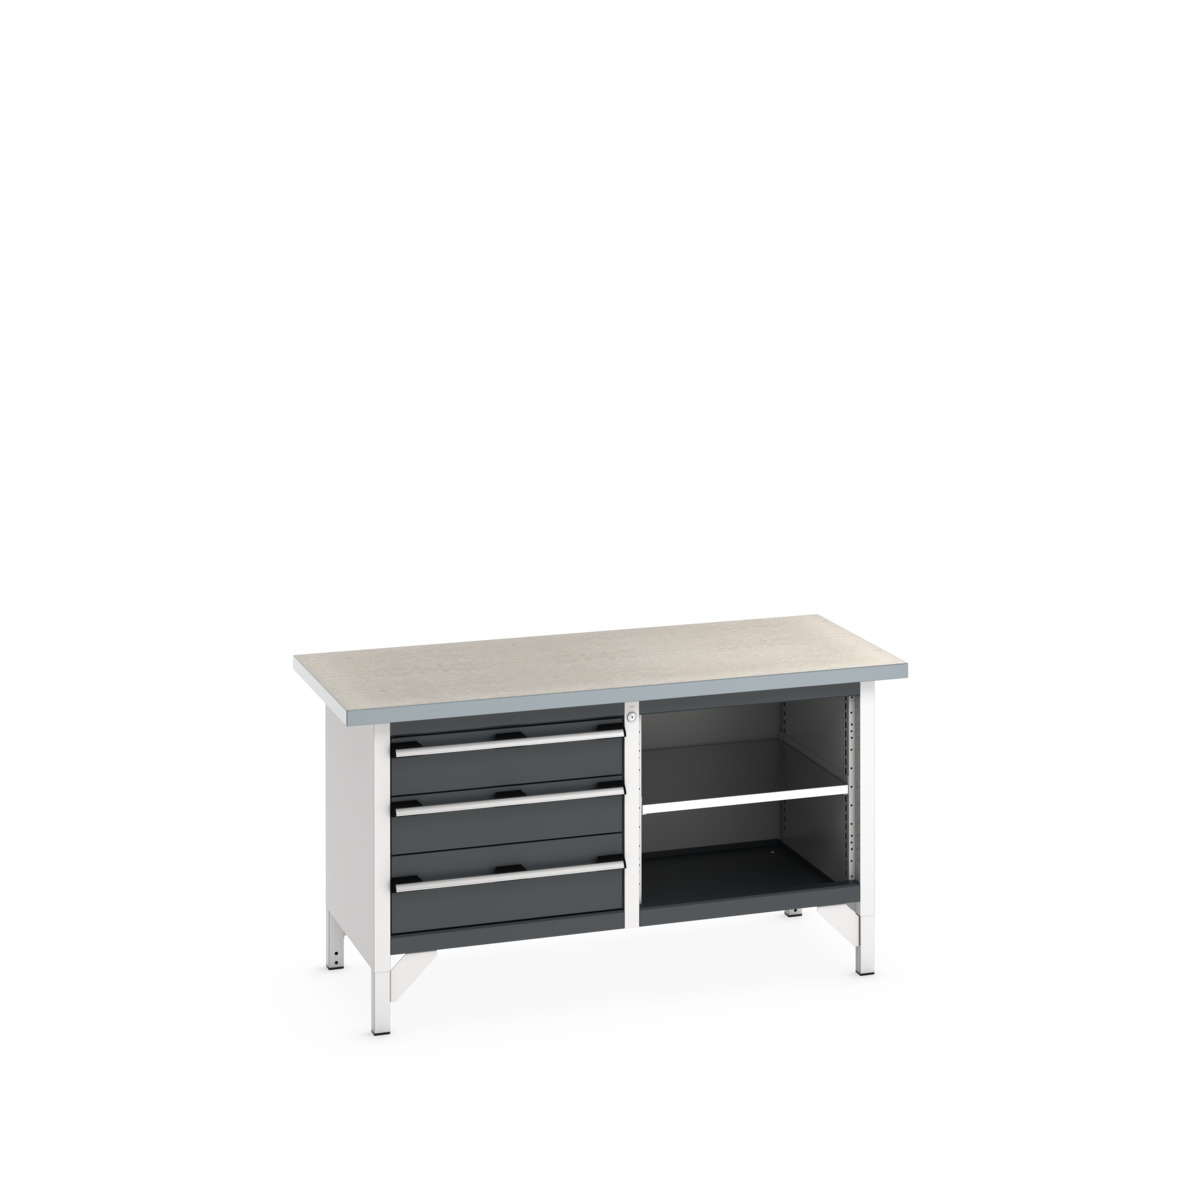 41002167. - cubio storage bench (lino)